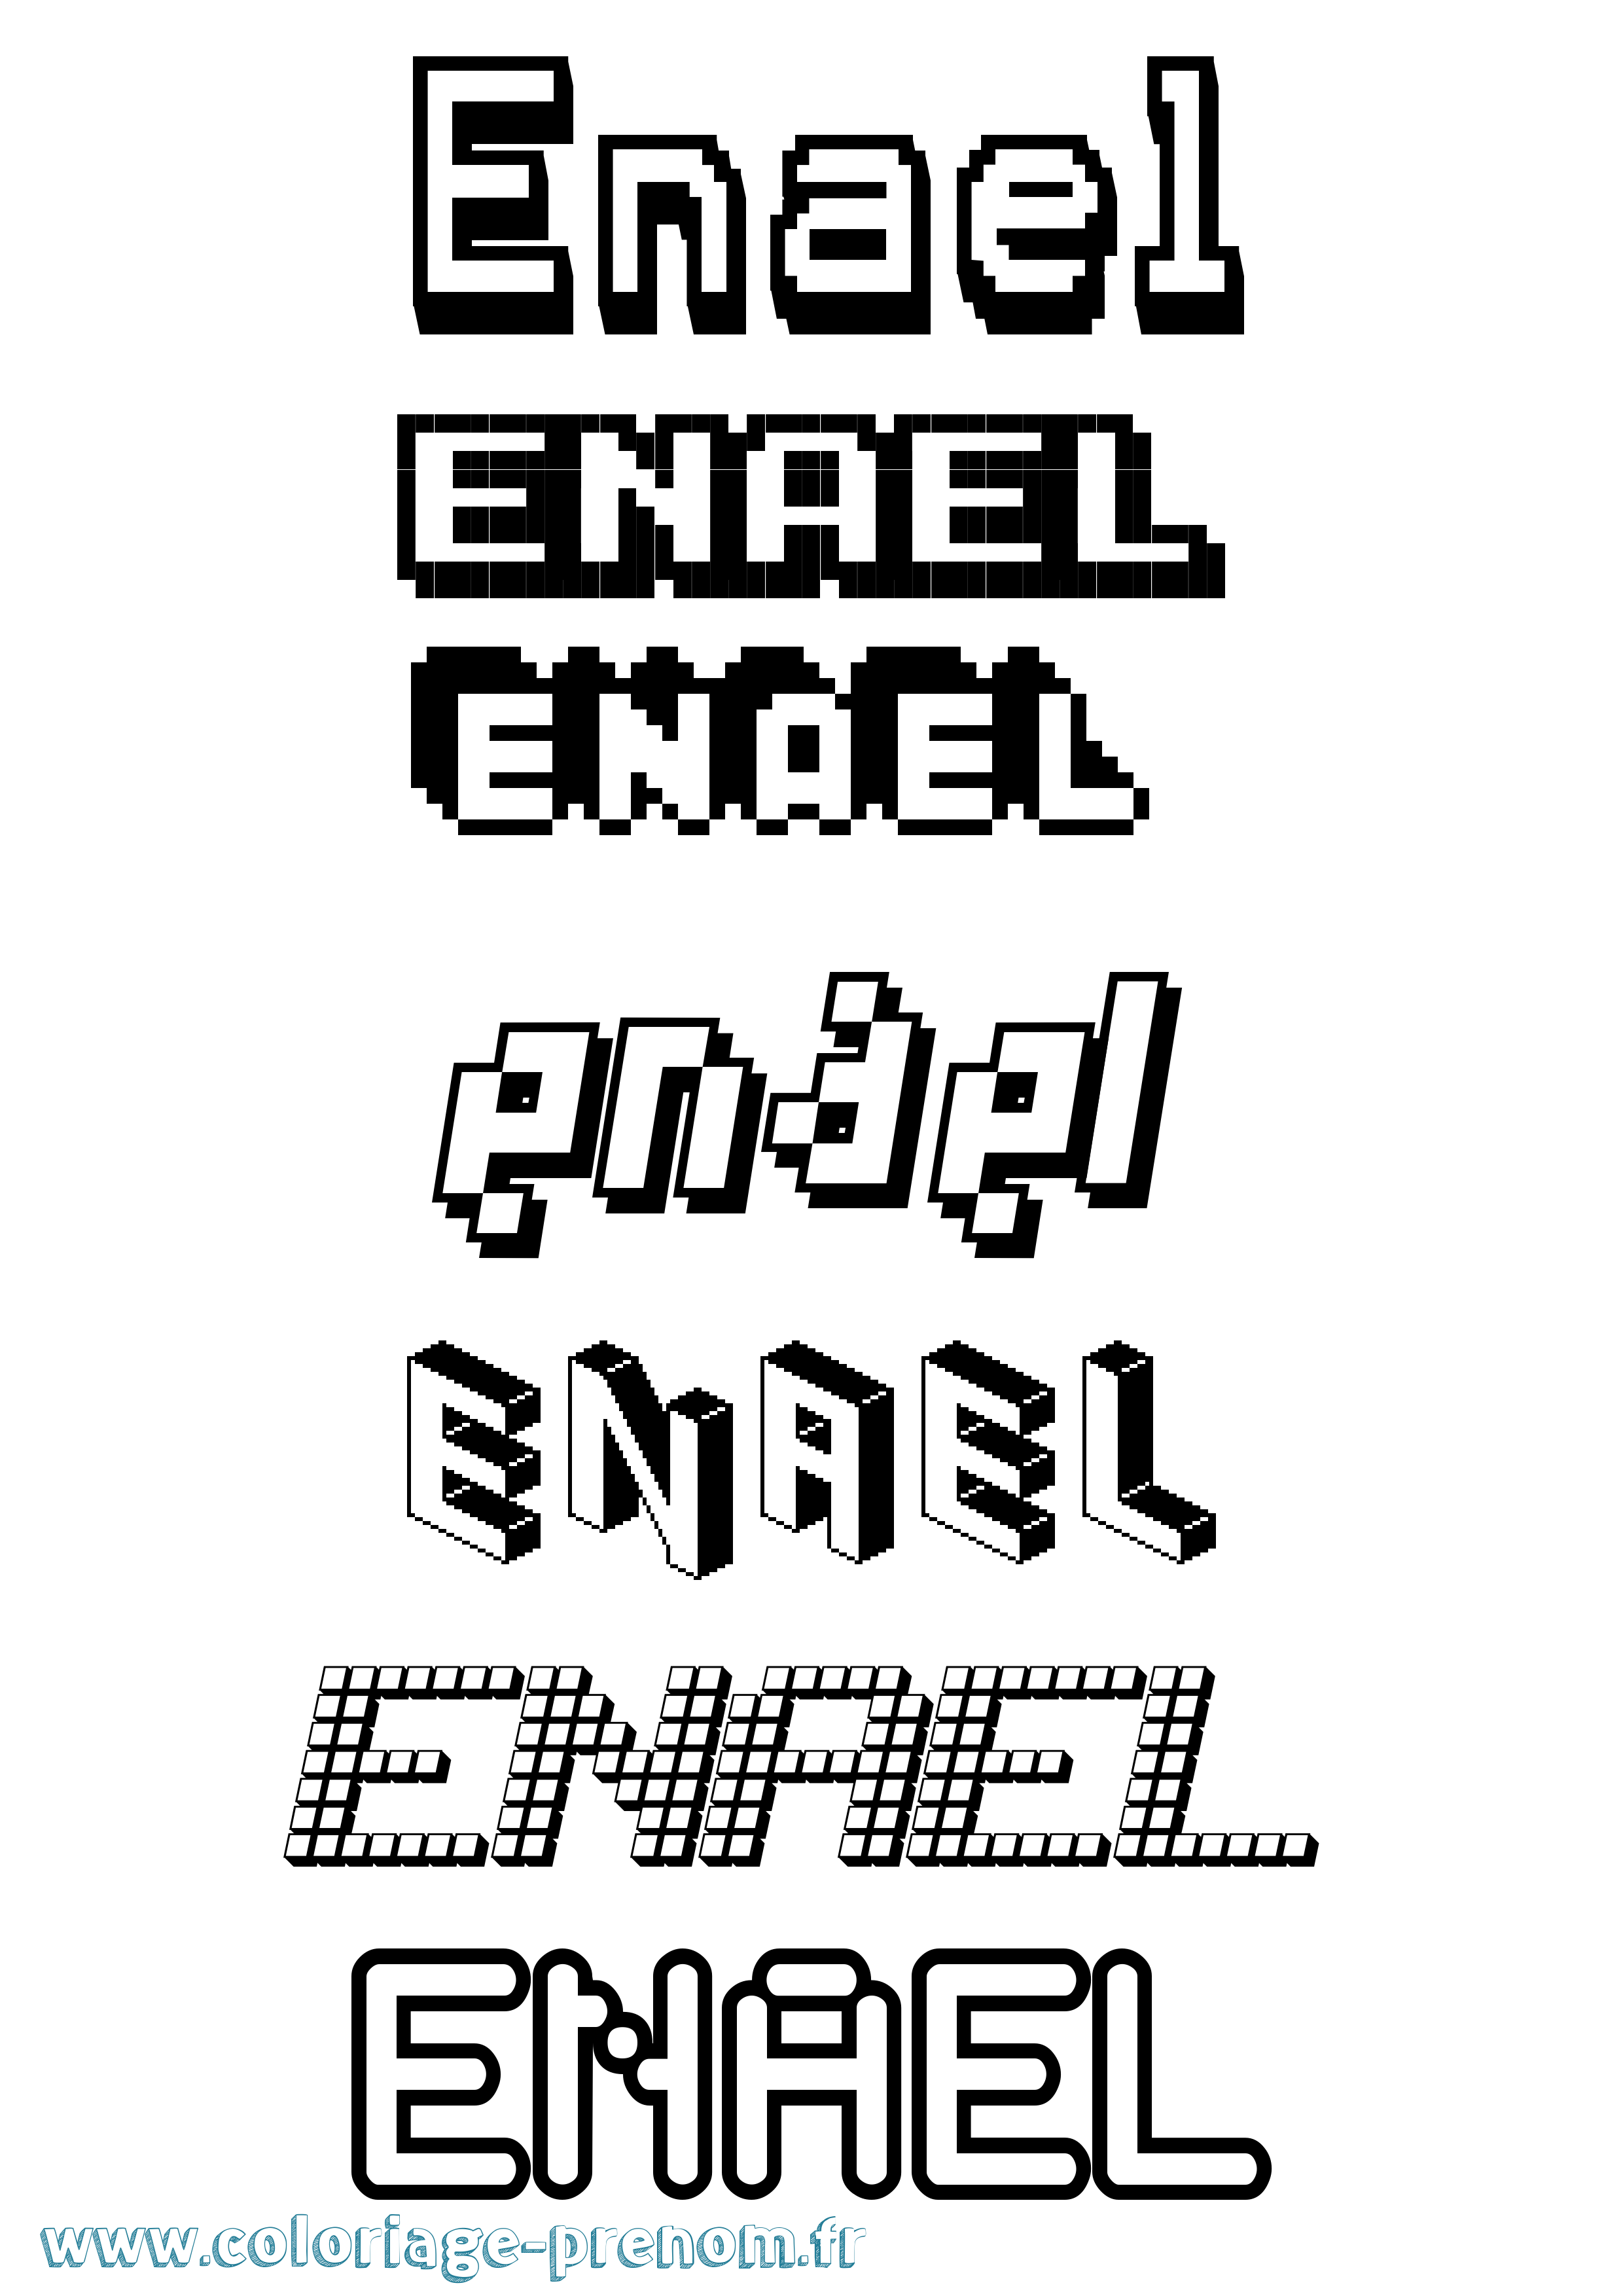 Coloriage prénom Enael Pixel